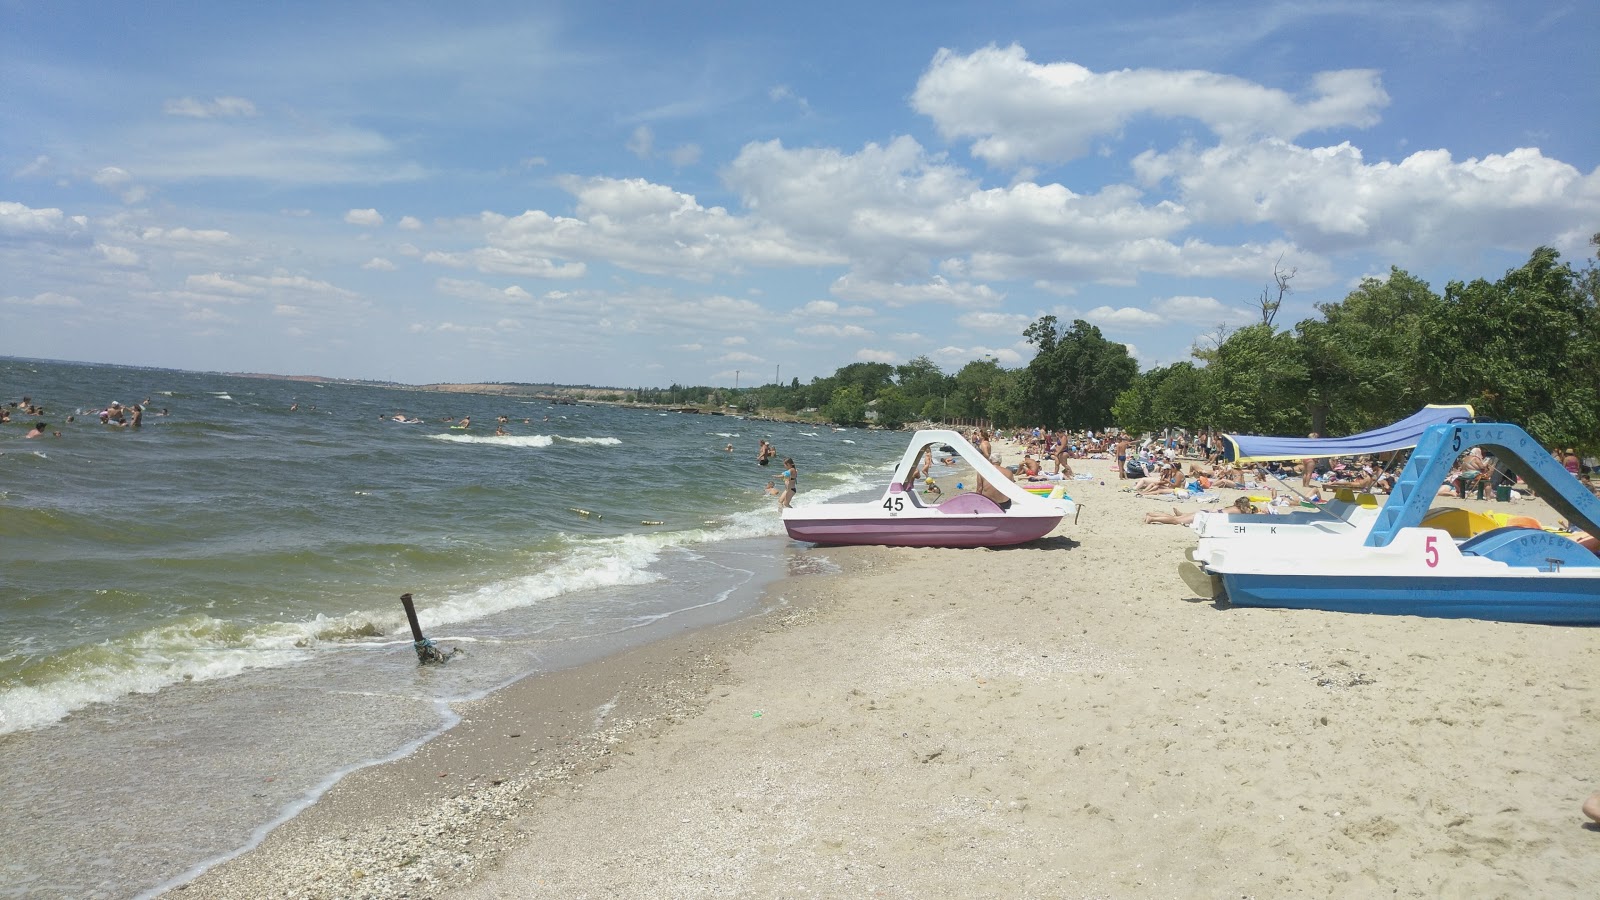 Foto de Ochakov Plyazh con playa amplia